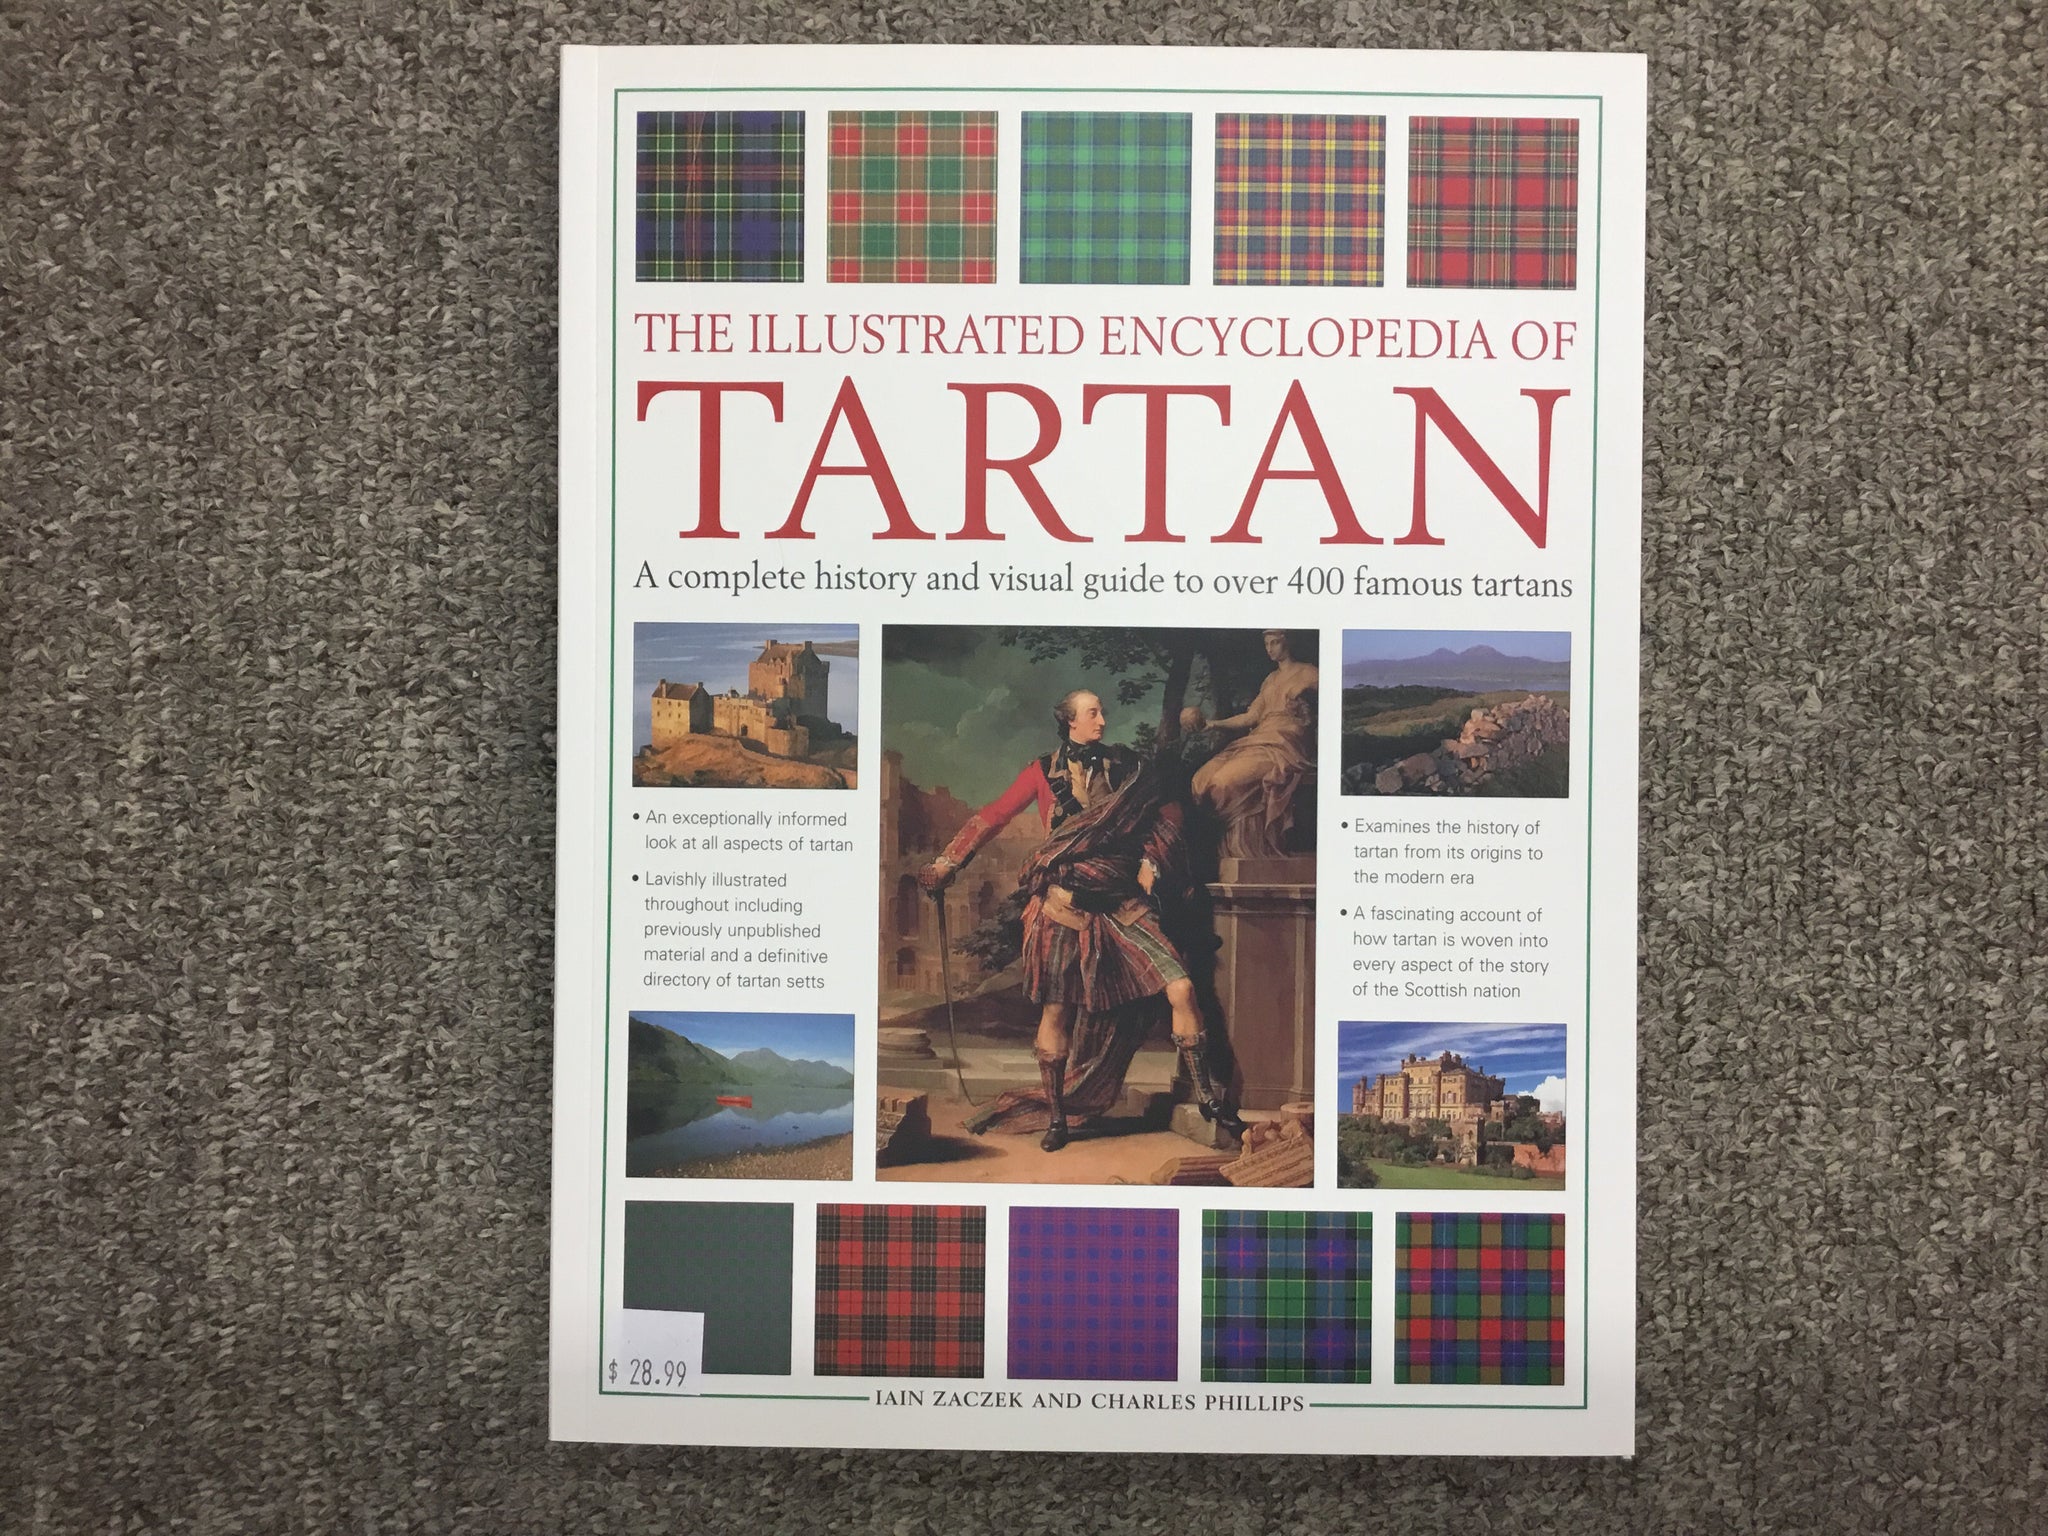 The Encyclopedia of Tartan